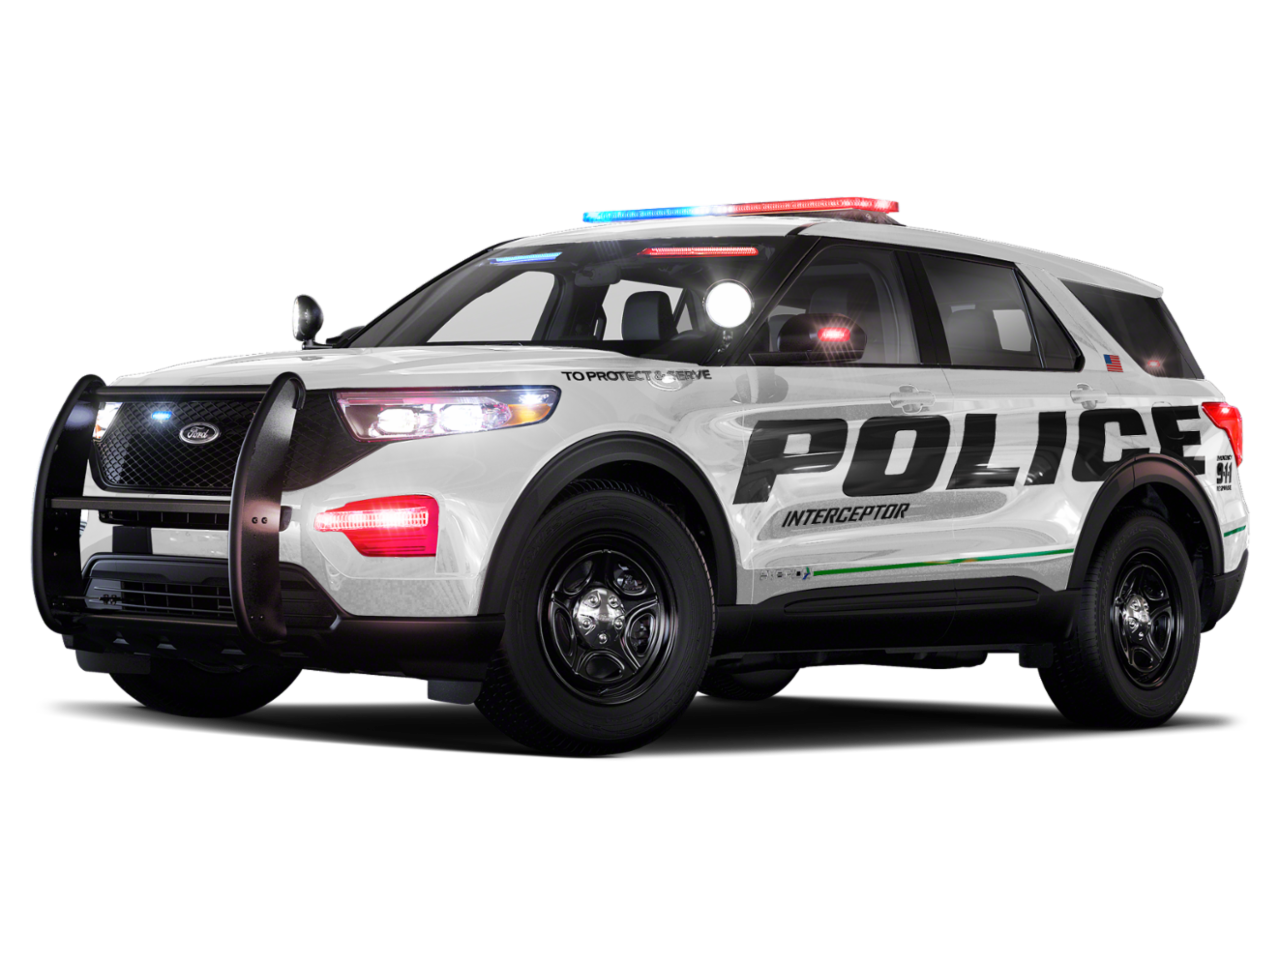 New Ford policeinterceptorutility from your Houlton, ME dealership